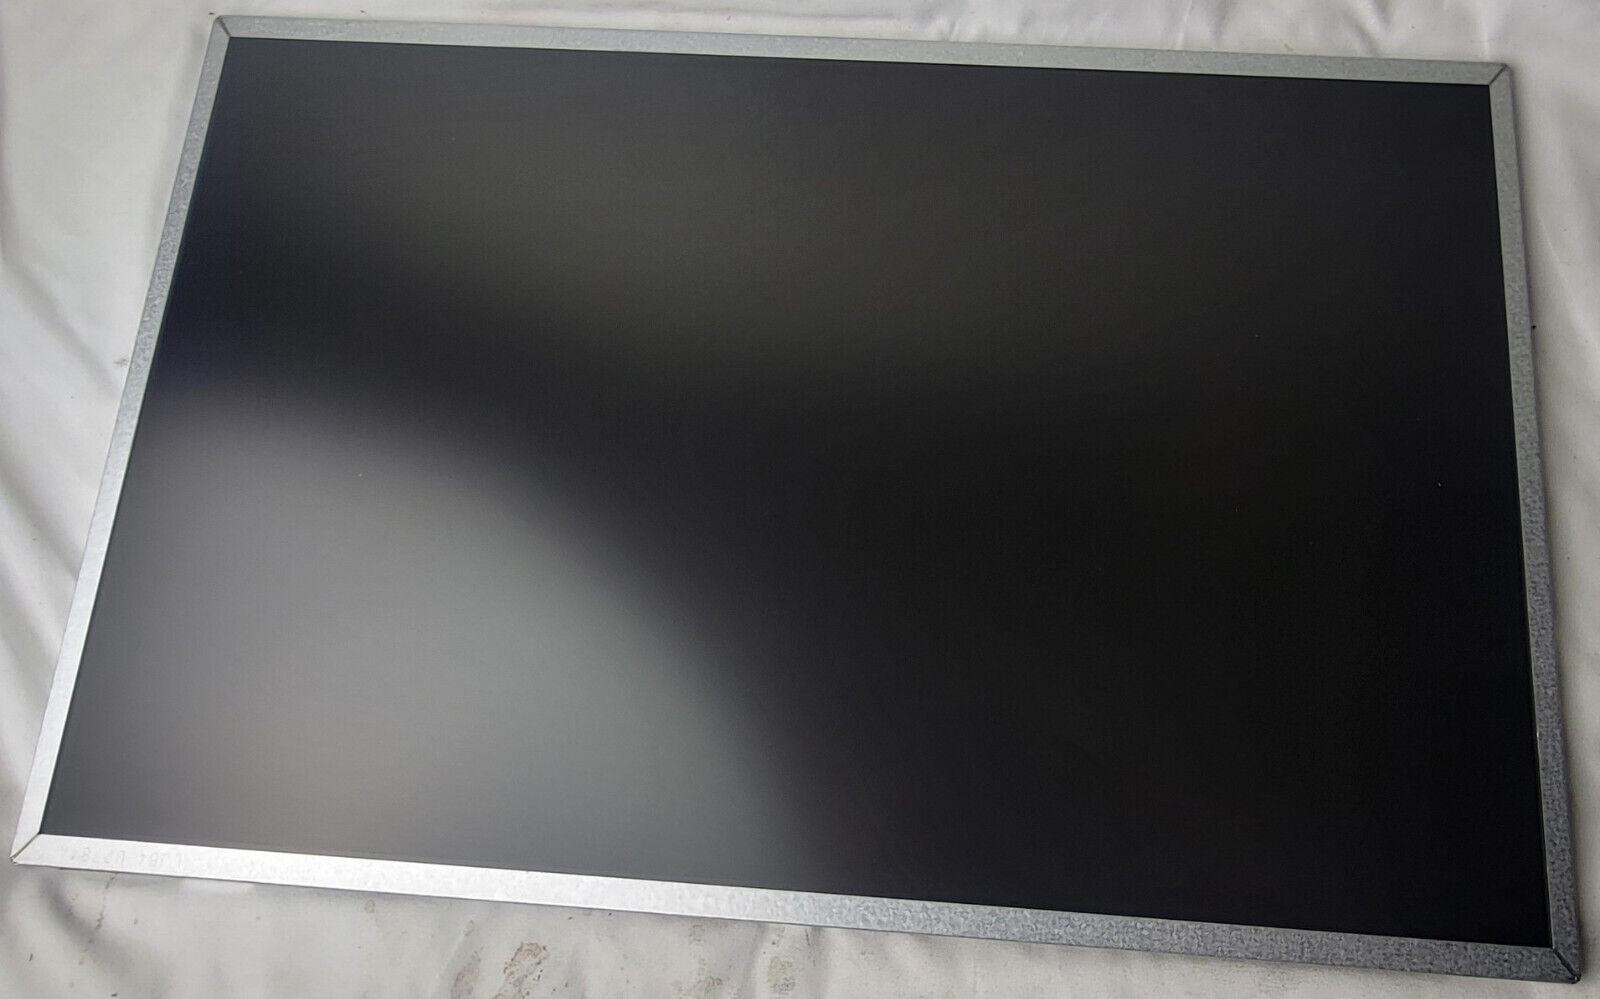 22" 1680×1050 Resolution LCD screen Panel Samsung LTM220MT09 Closet - $163.35